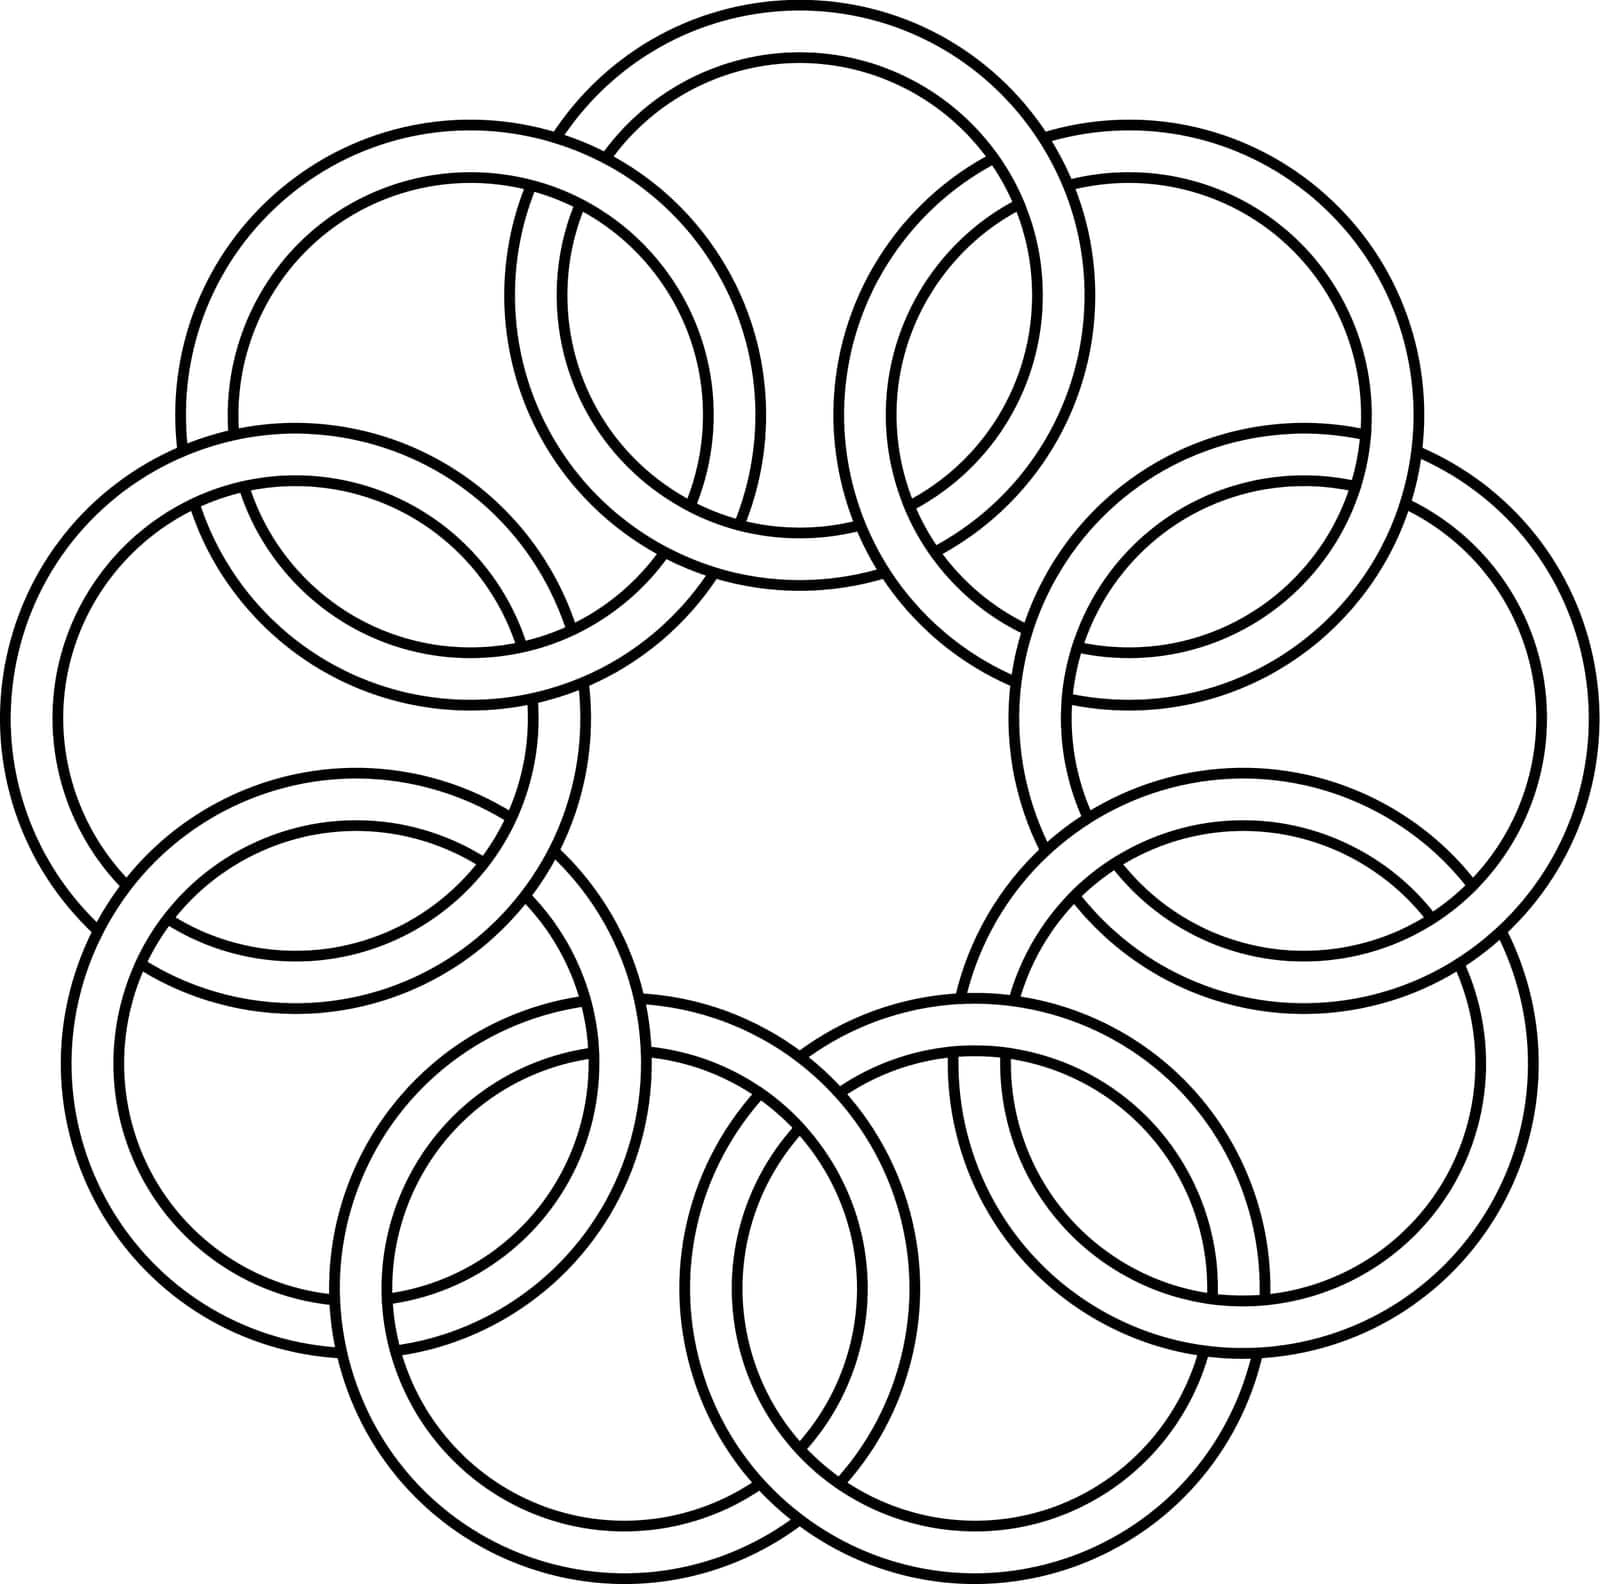 Pattern binding rings, chain links, round rings, vector